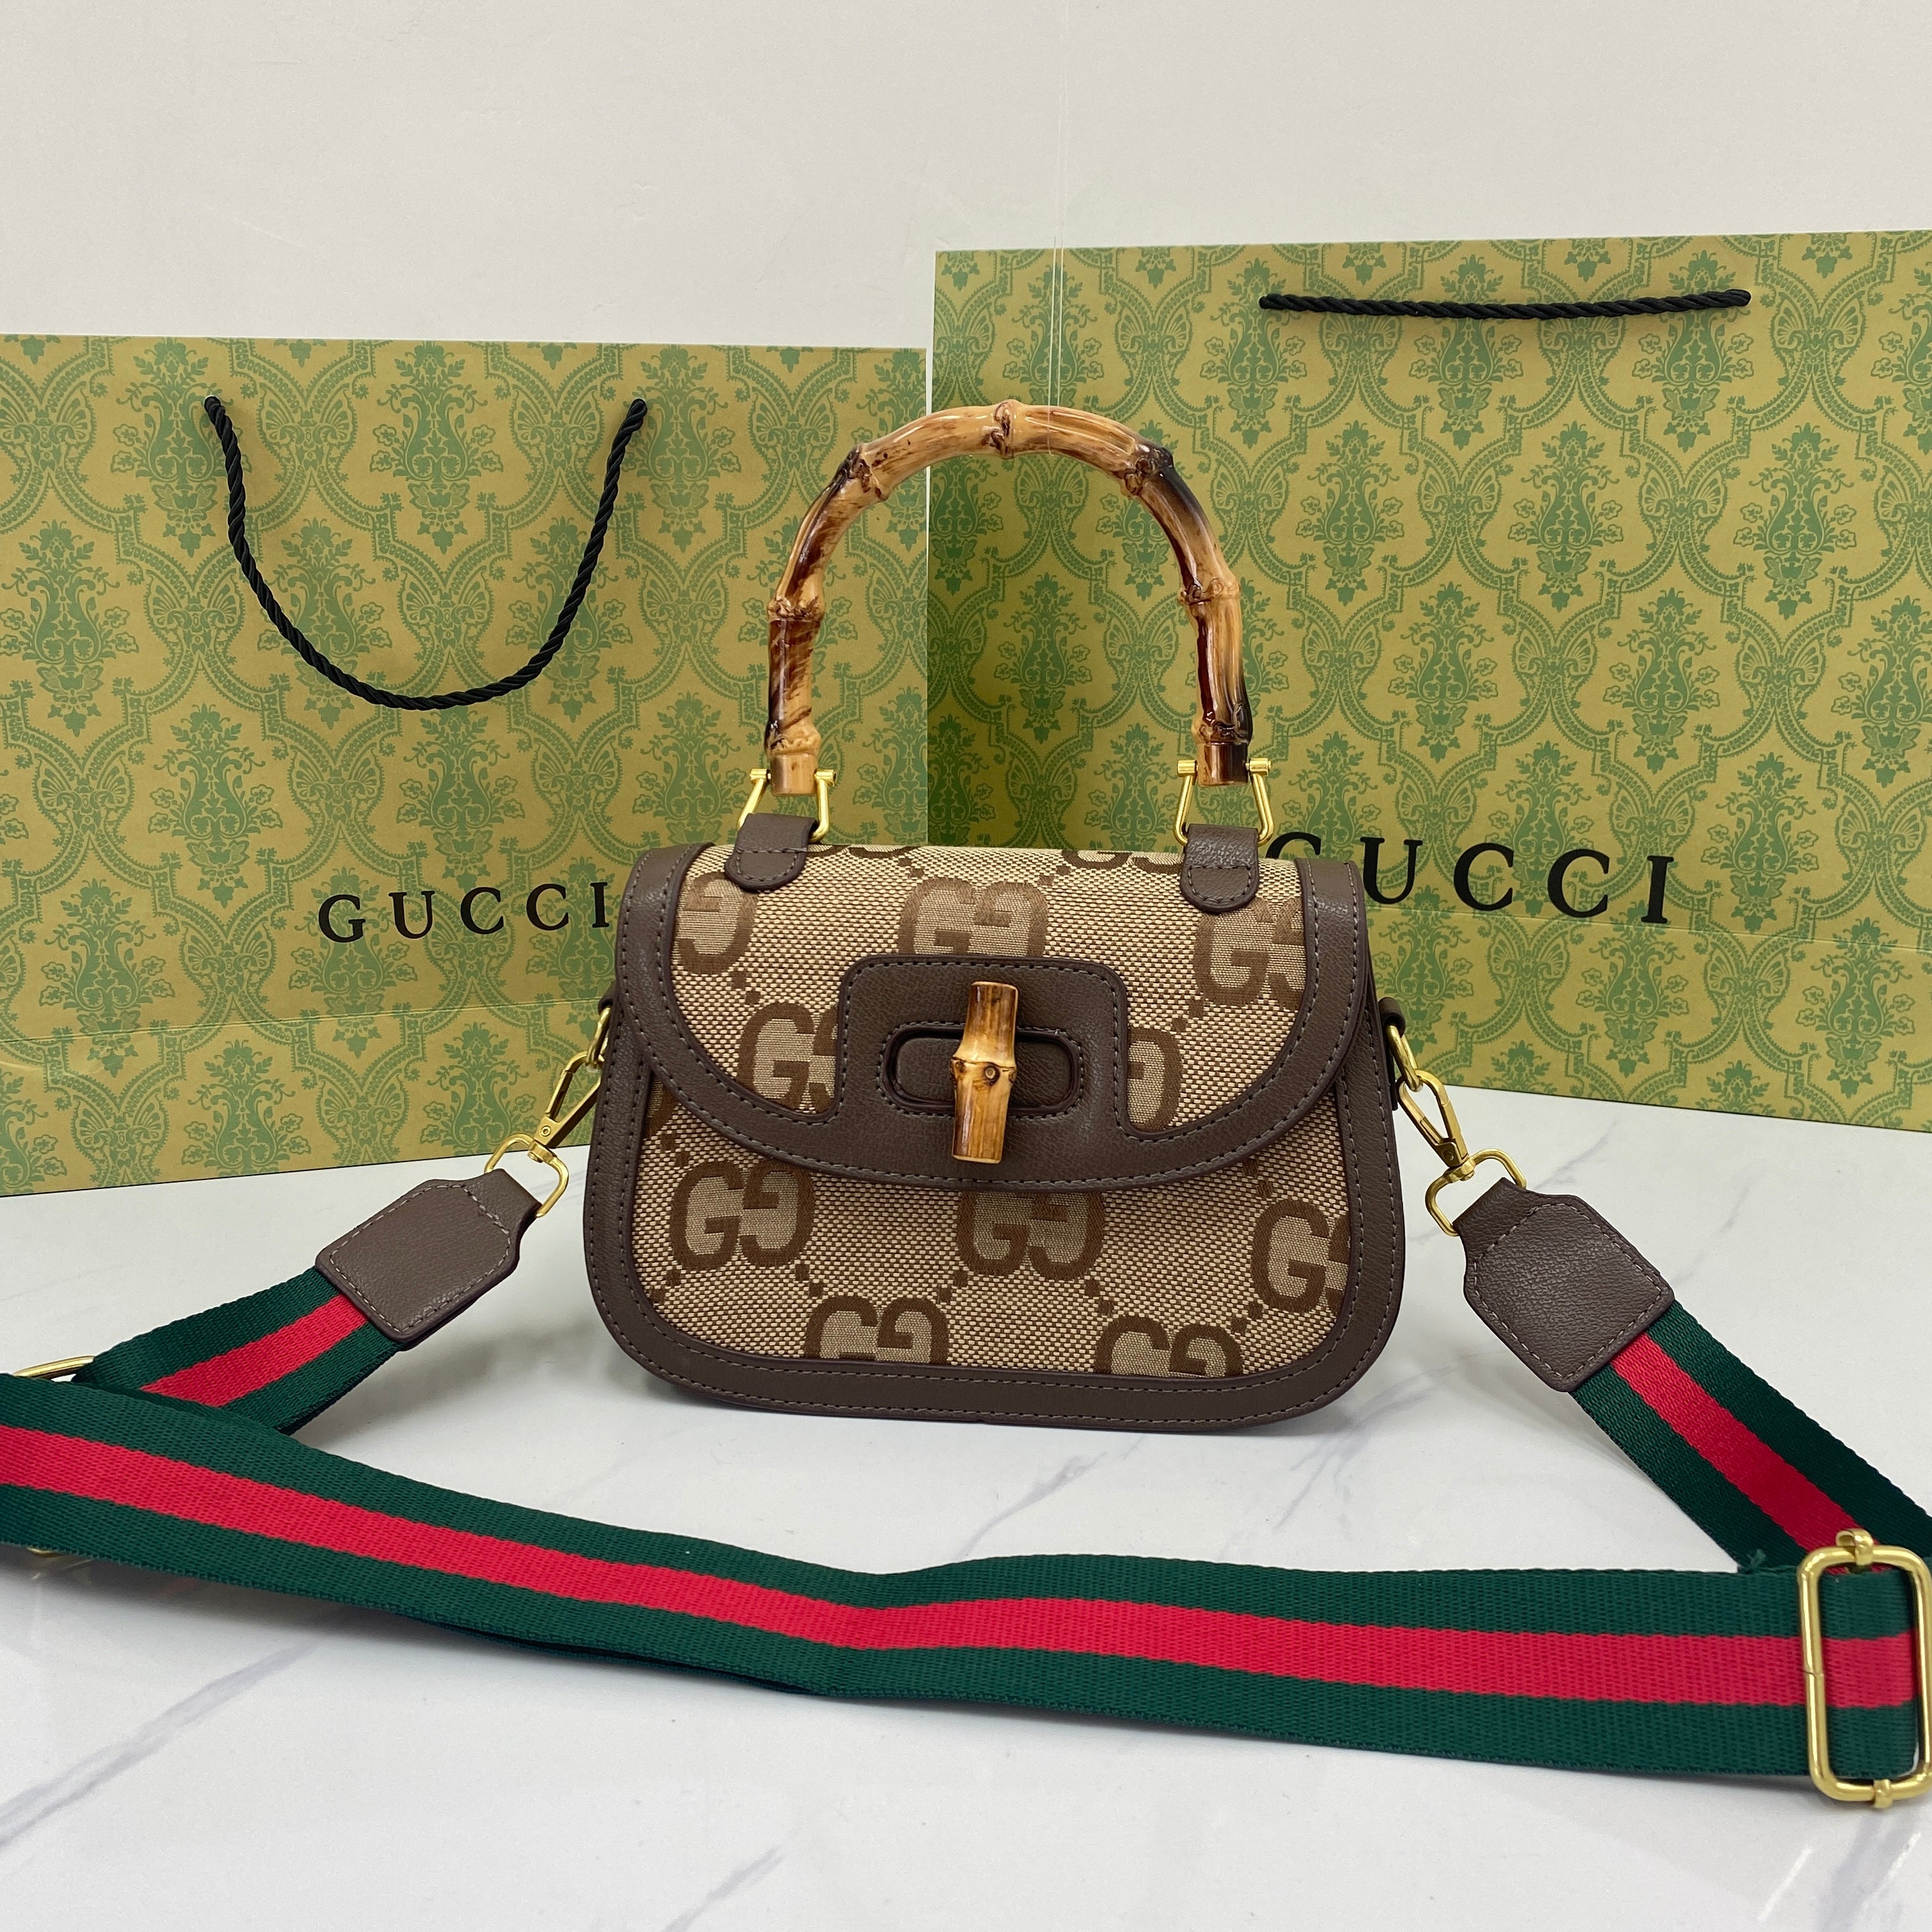 GG Double G Bamboo Handle Handbag Women's Leather Bag Vintag